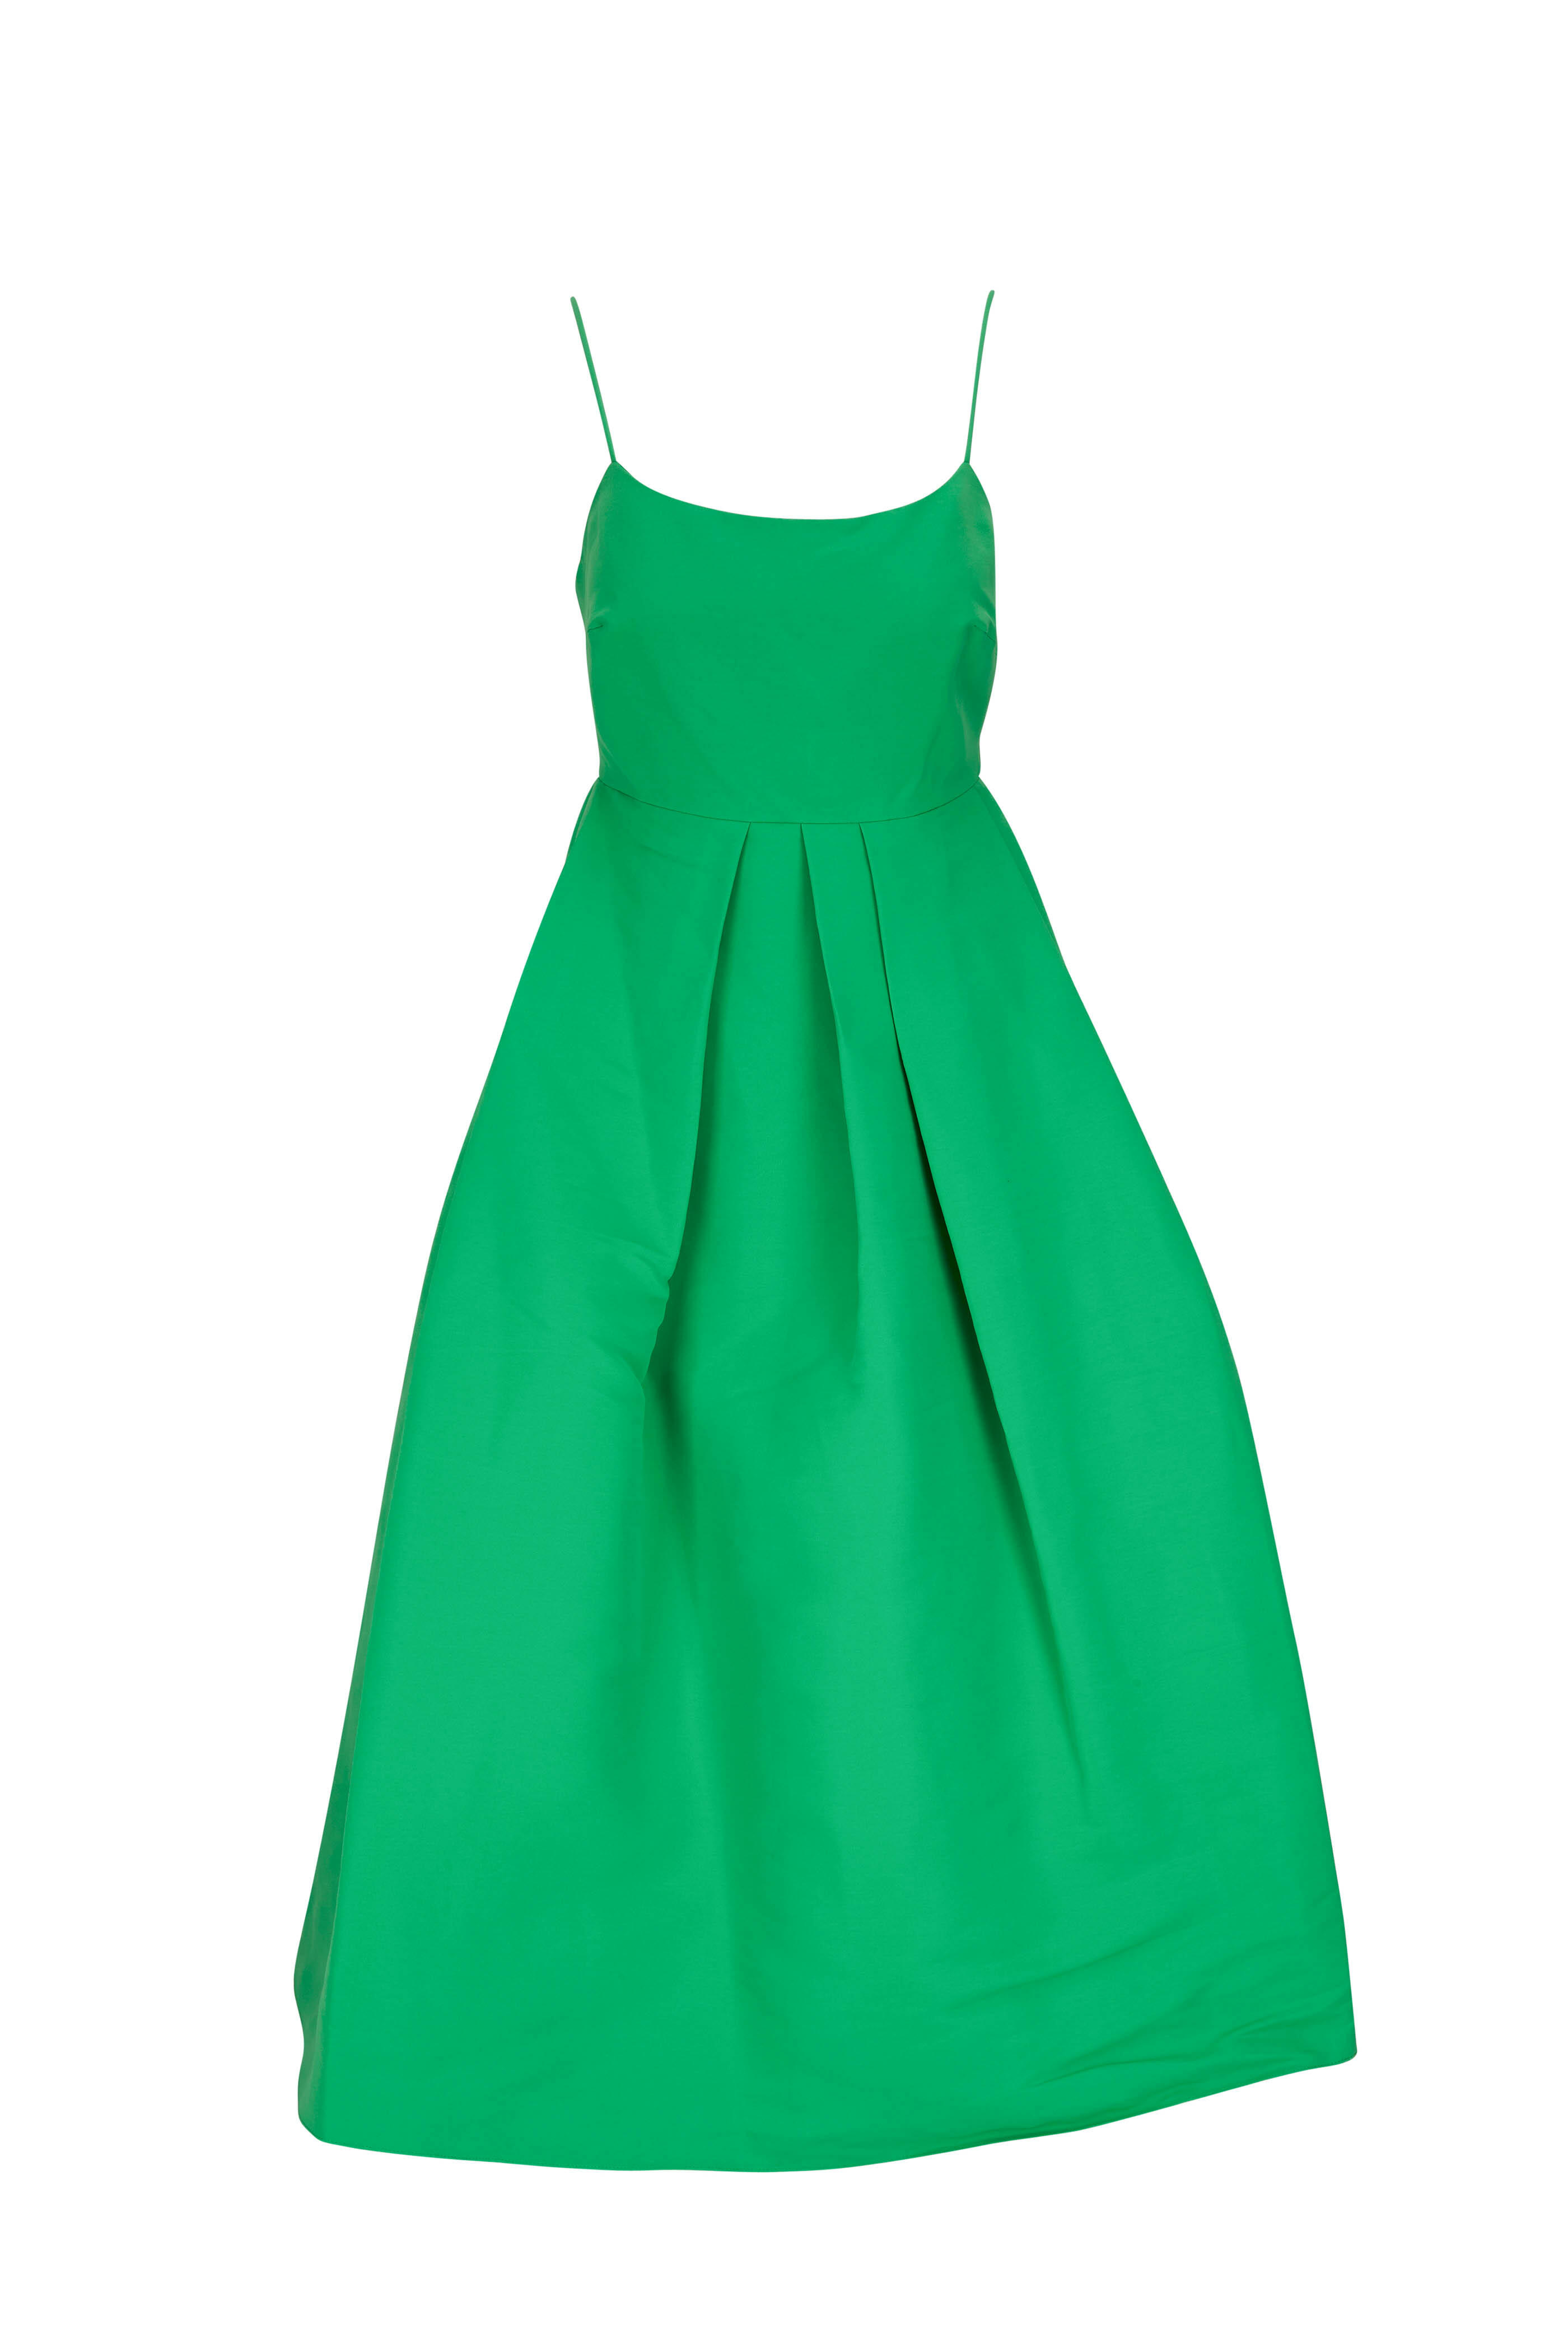 Sachin + Babi - Audra Kelly Green Pleated Dress